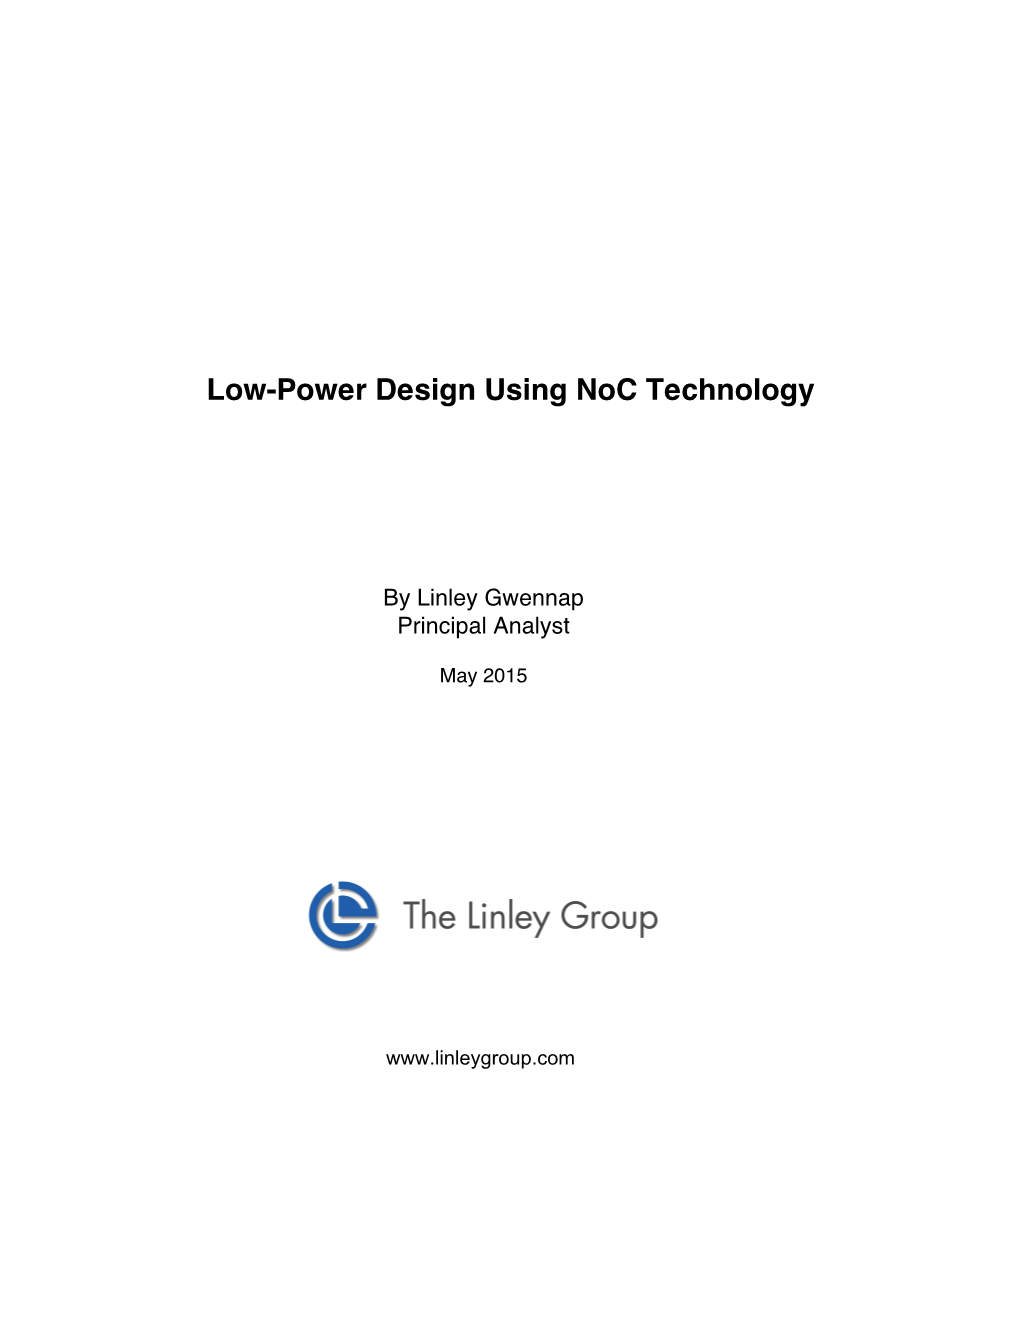 Low-Power Design Using Noc Technology